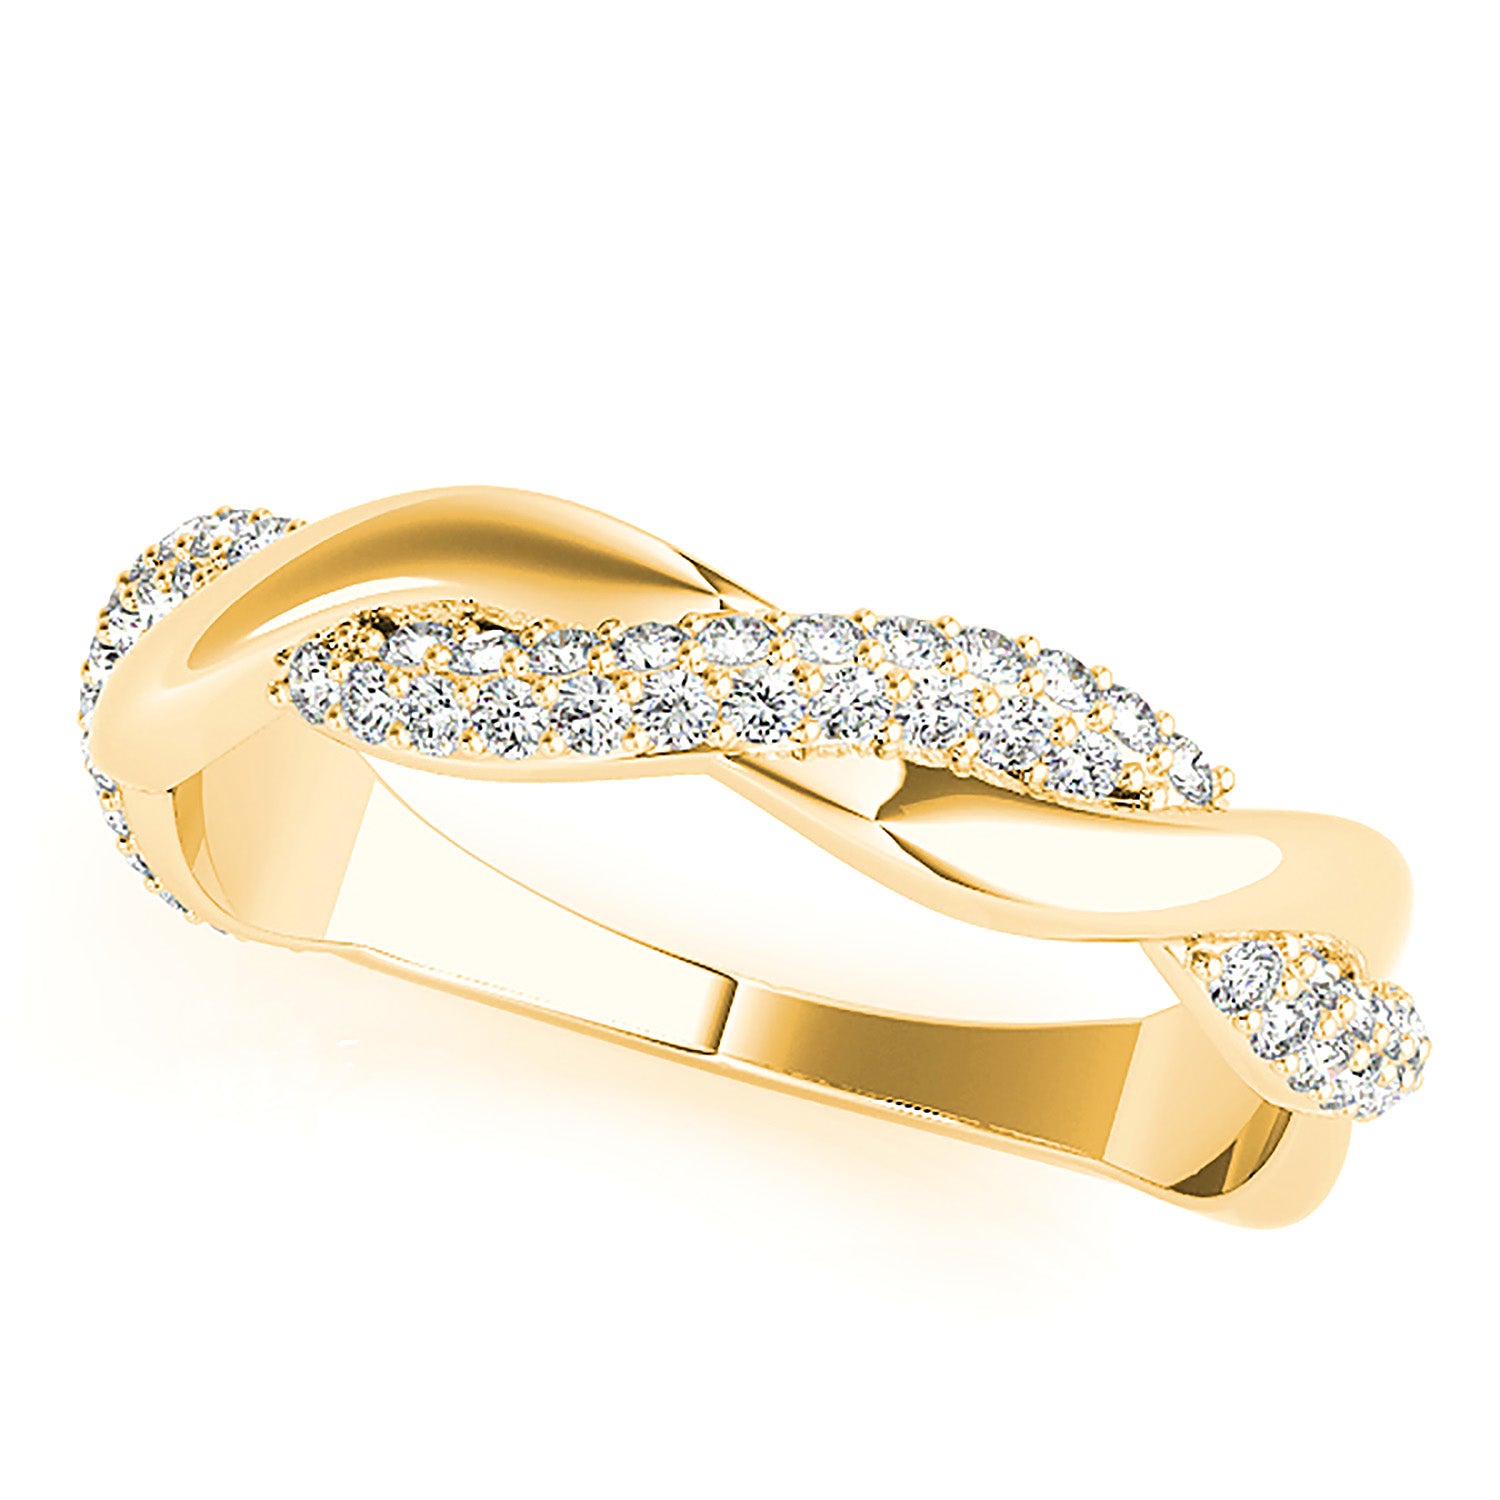 Diamond Wedding Band - 14K/18k Solid White Gold / Platinum | Pave Set Diamond Anniversary Ring | Modern Design-in 14K/18K White, Yellow, Rose Gold and Platinum - Christmas Jewelry Gift -VIRABYANI